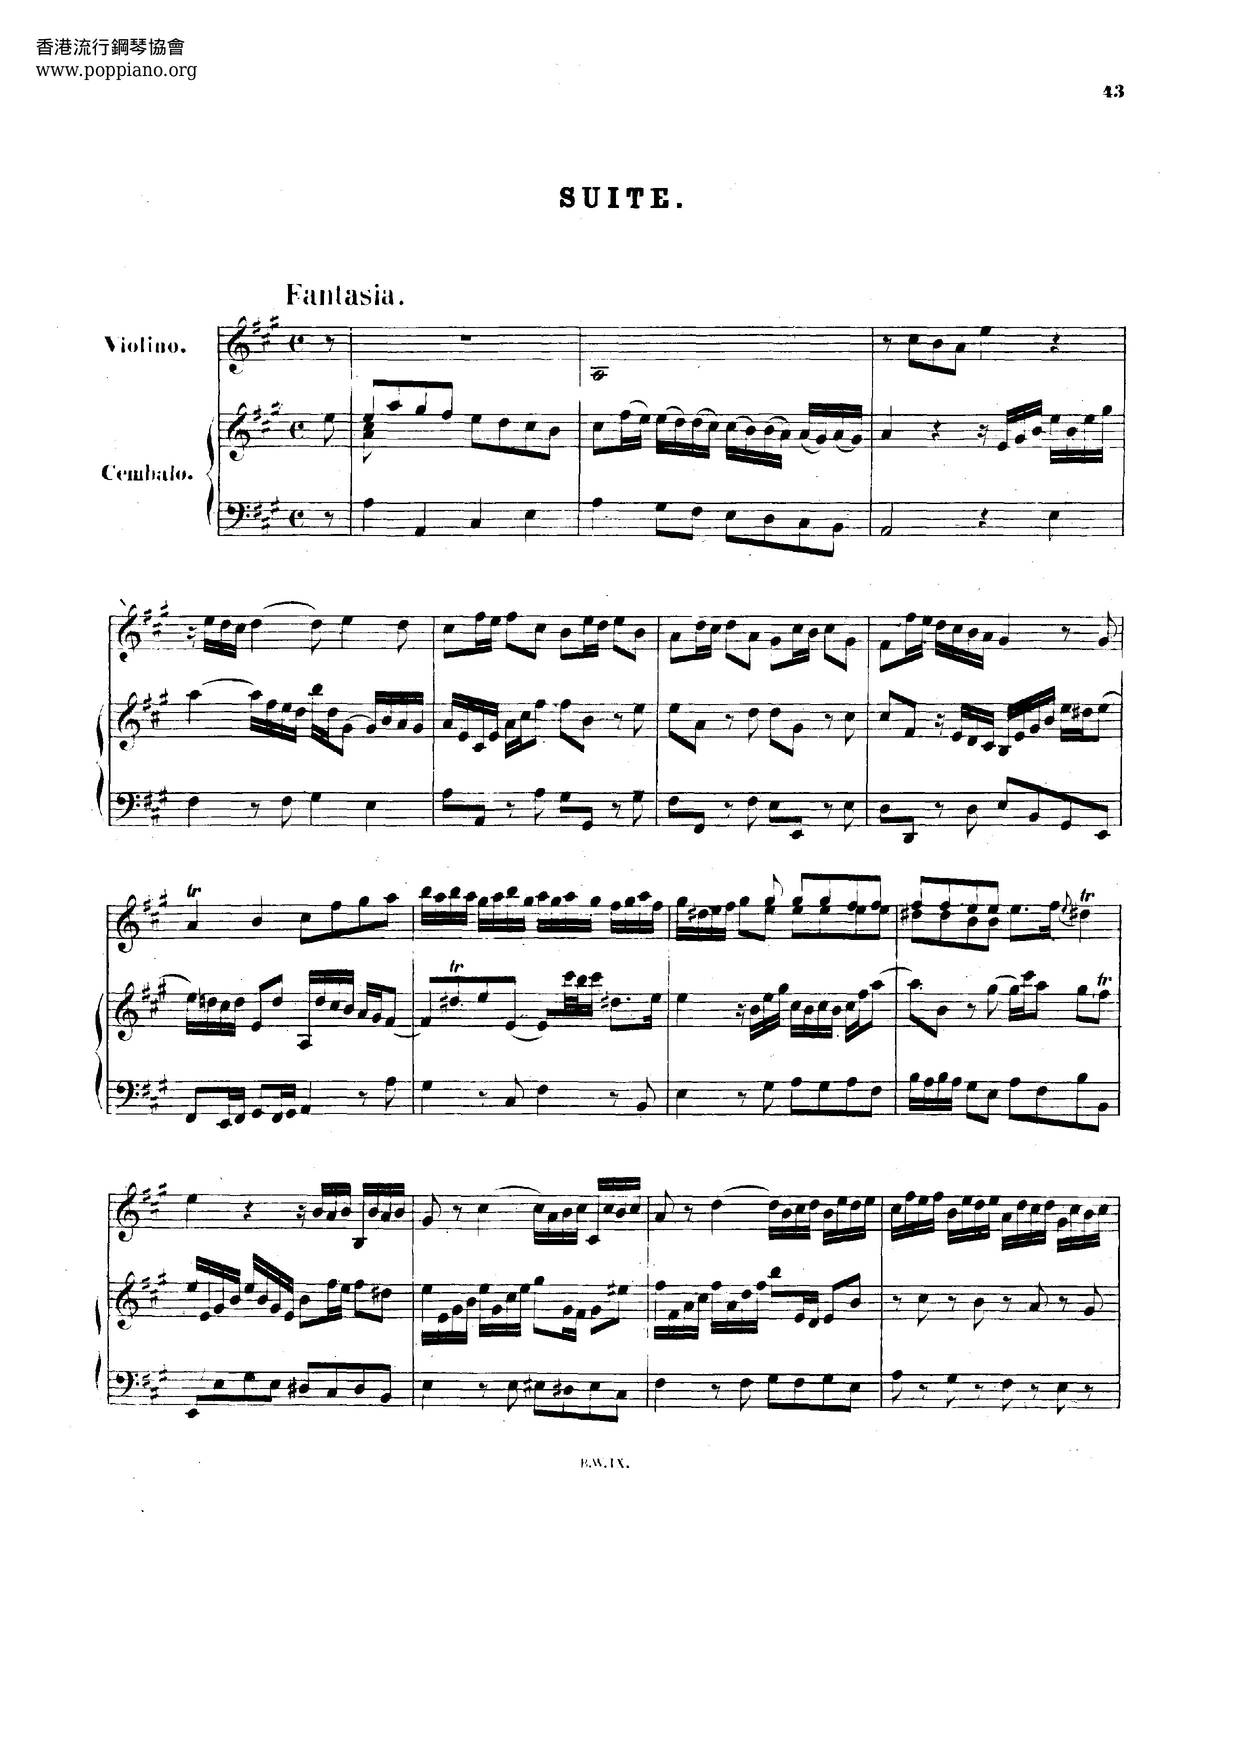 Suite In A Major, BWV 1025 Score